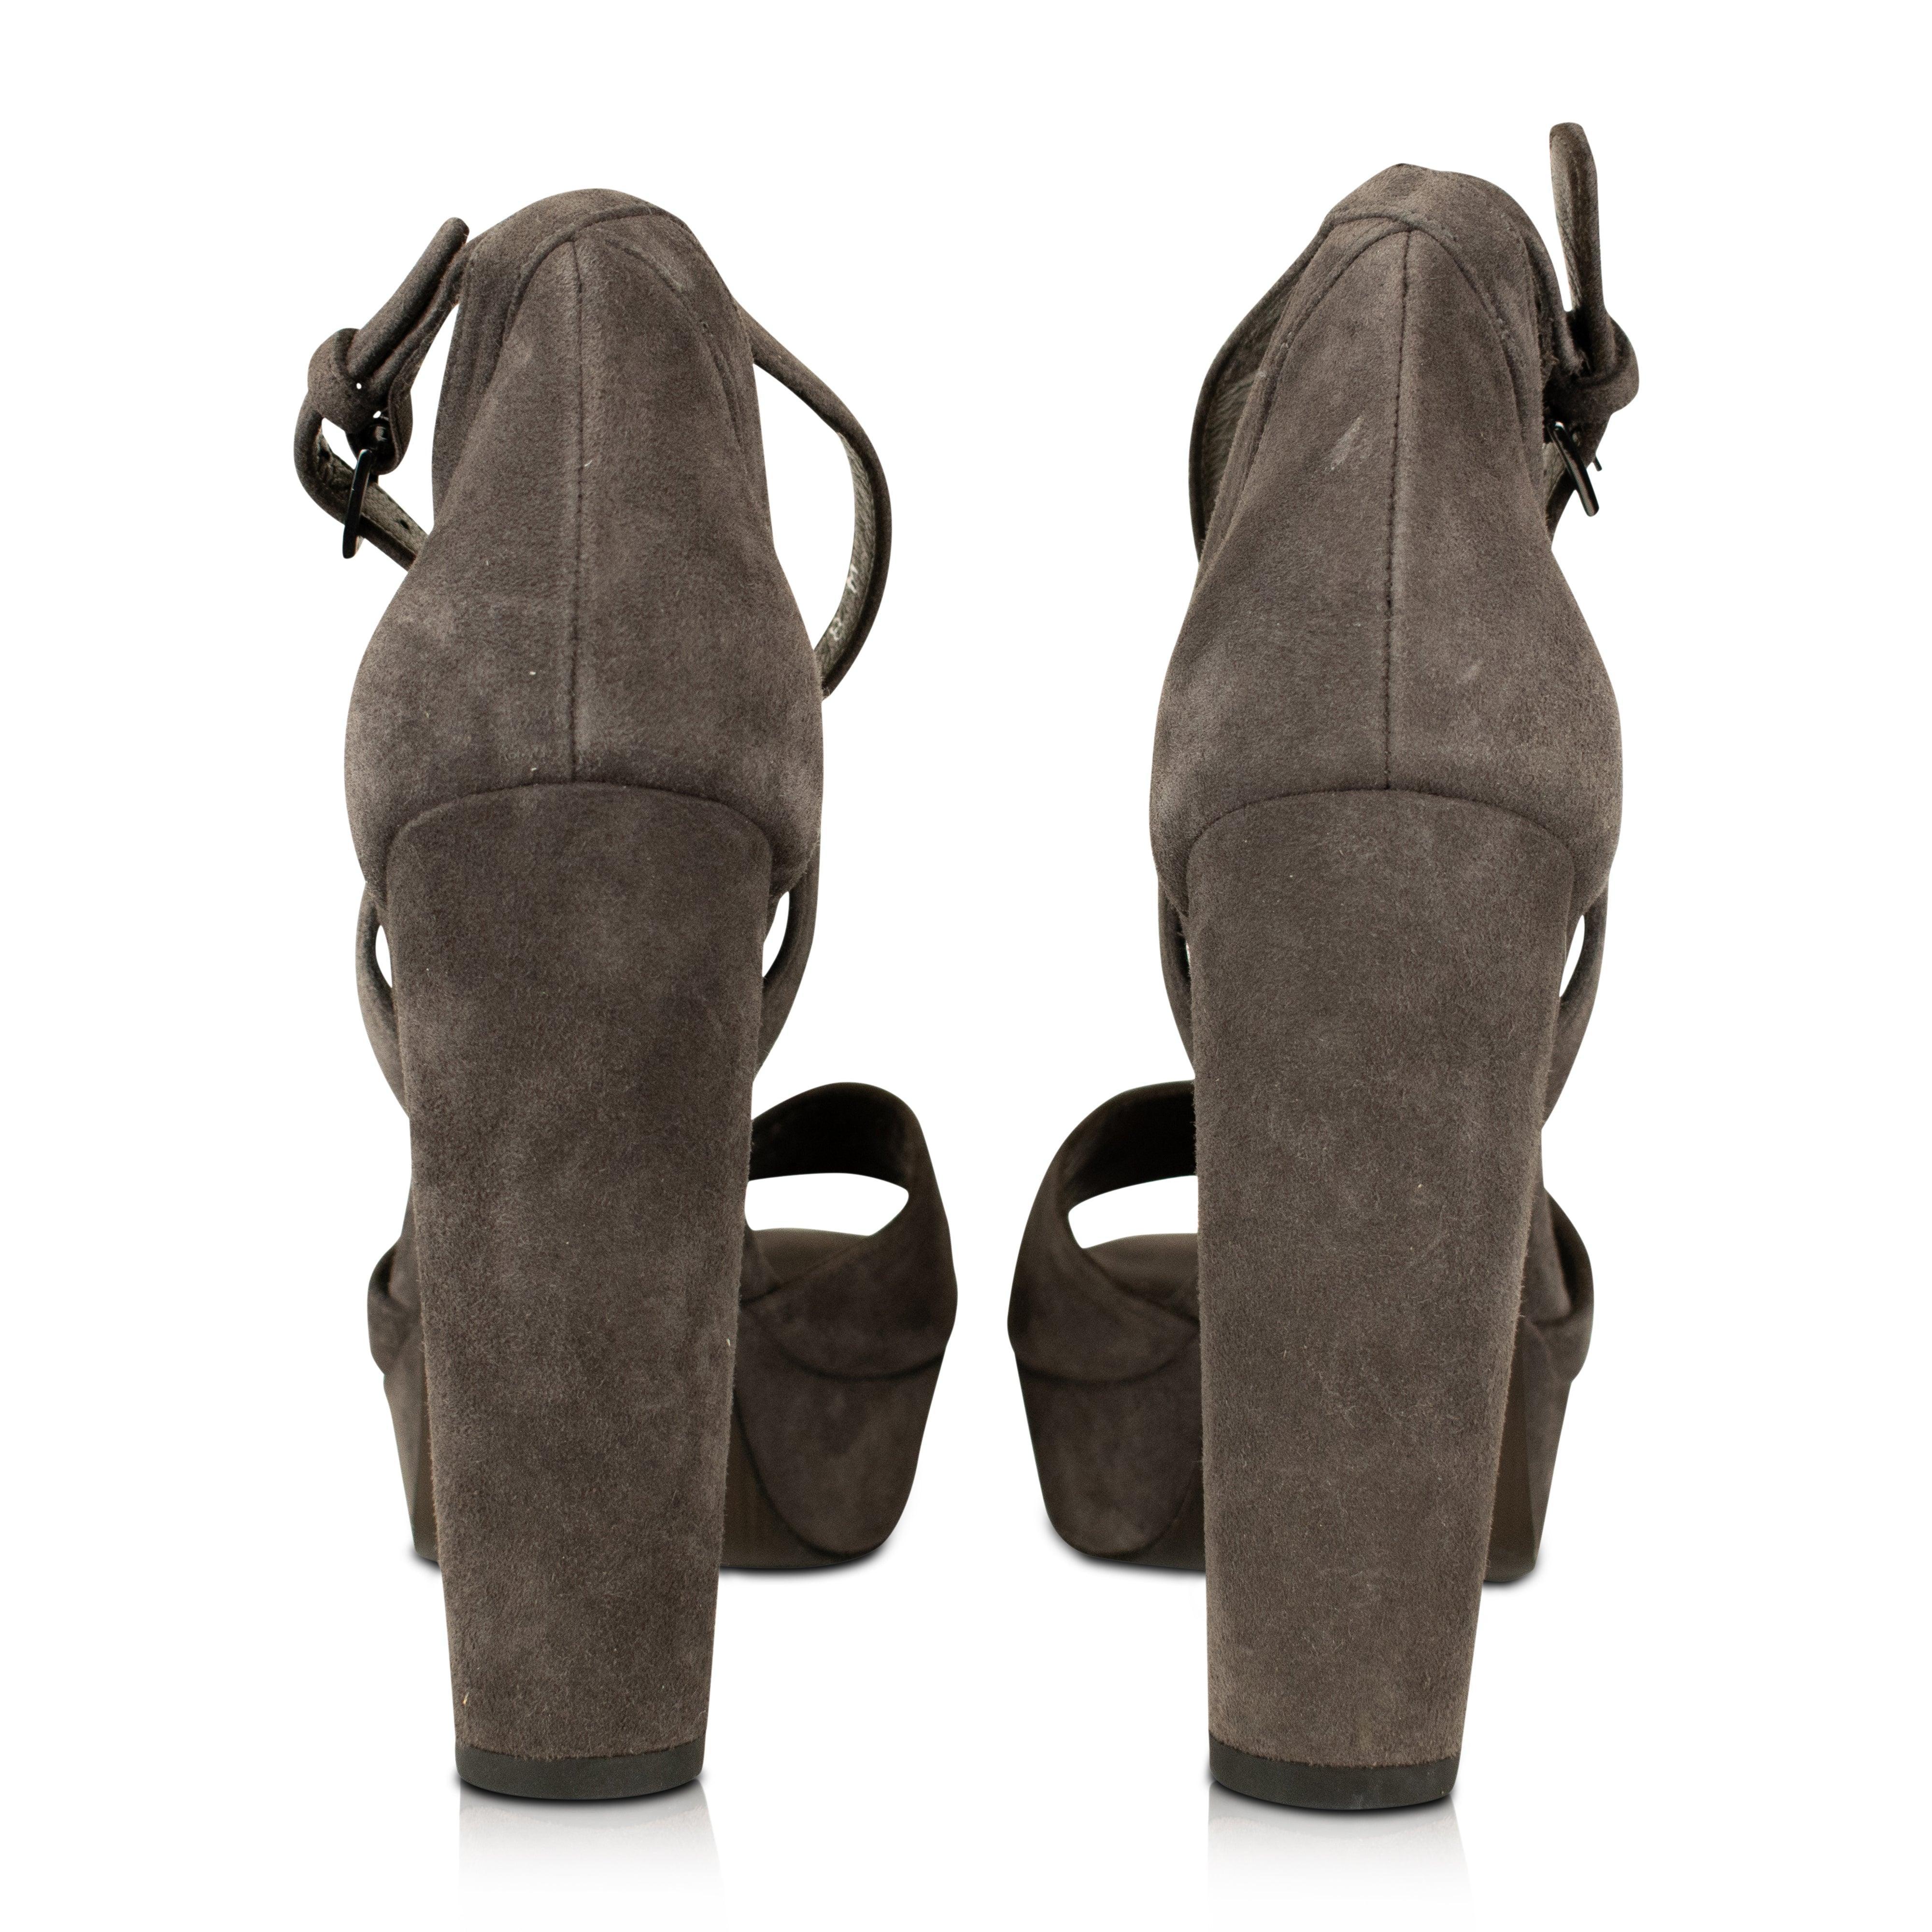 Stuart Weitzman Platform Sandals - 8 - Fashionably Yours